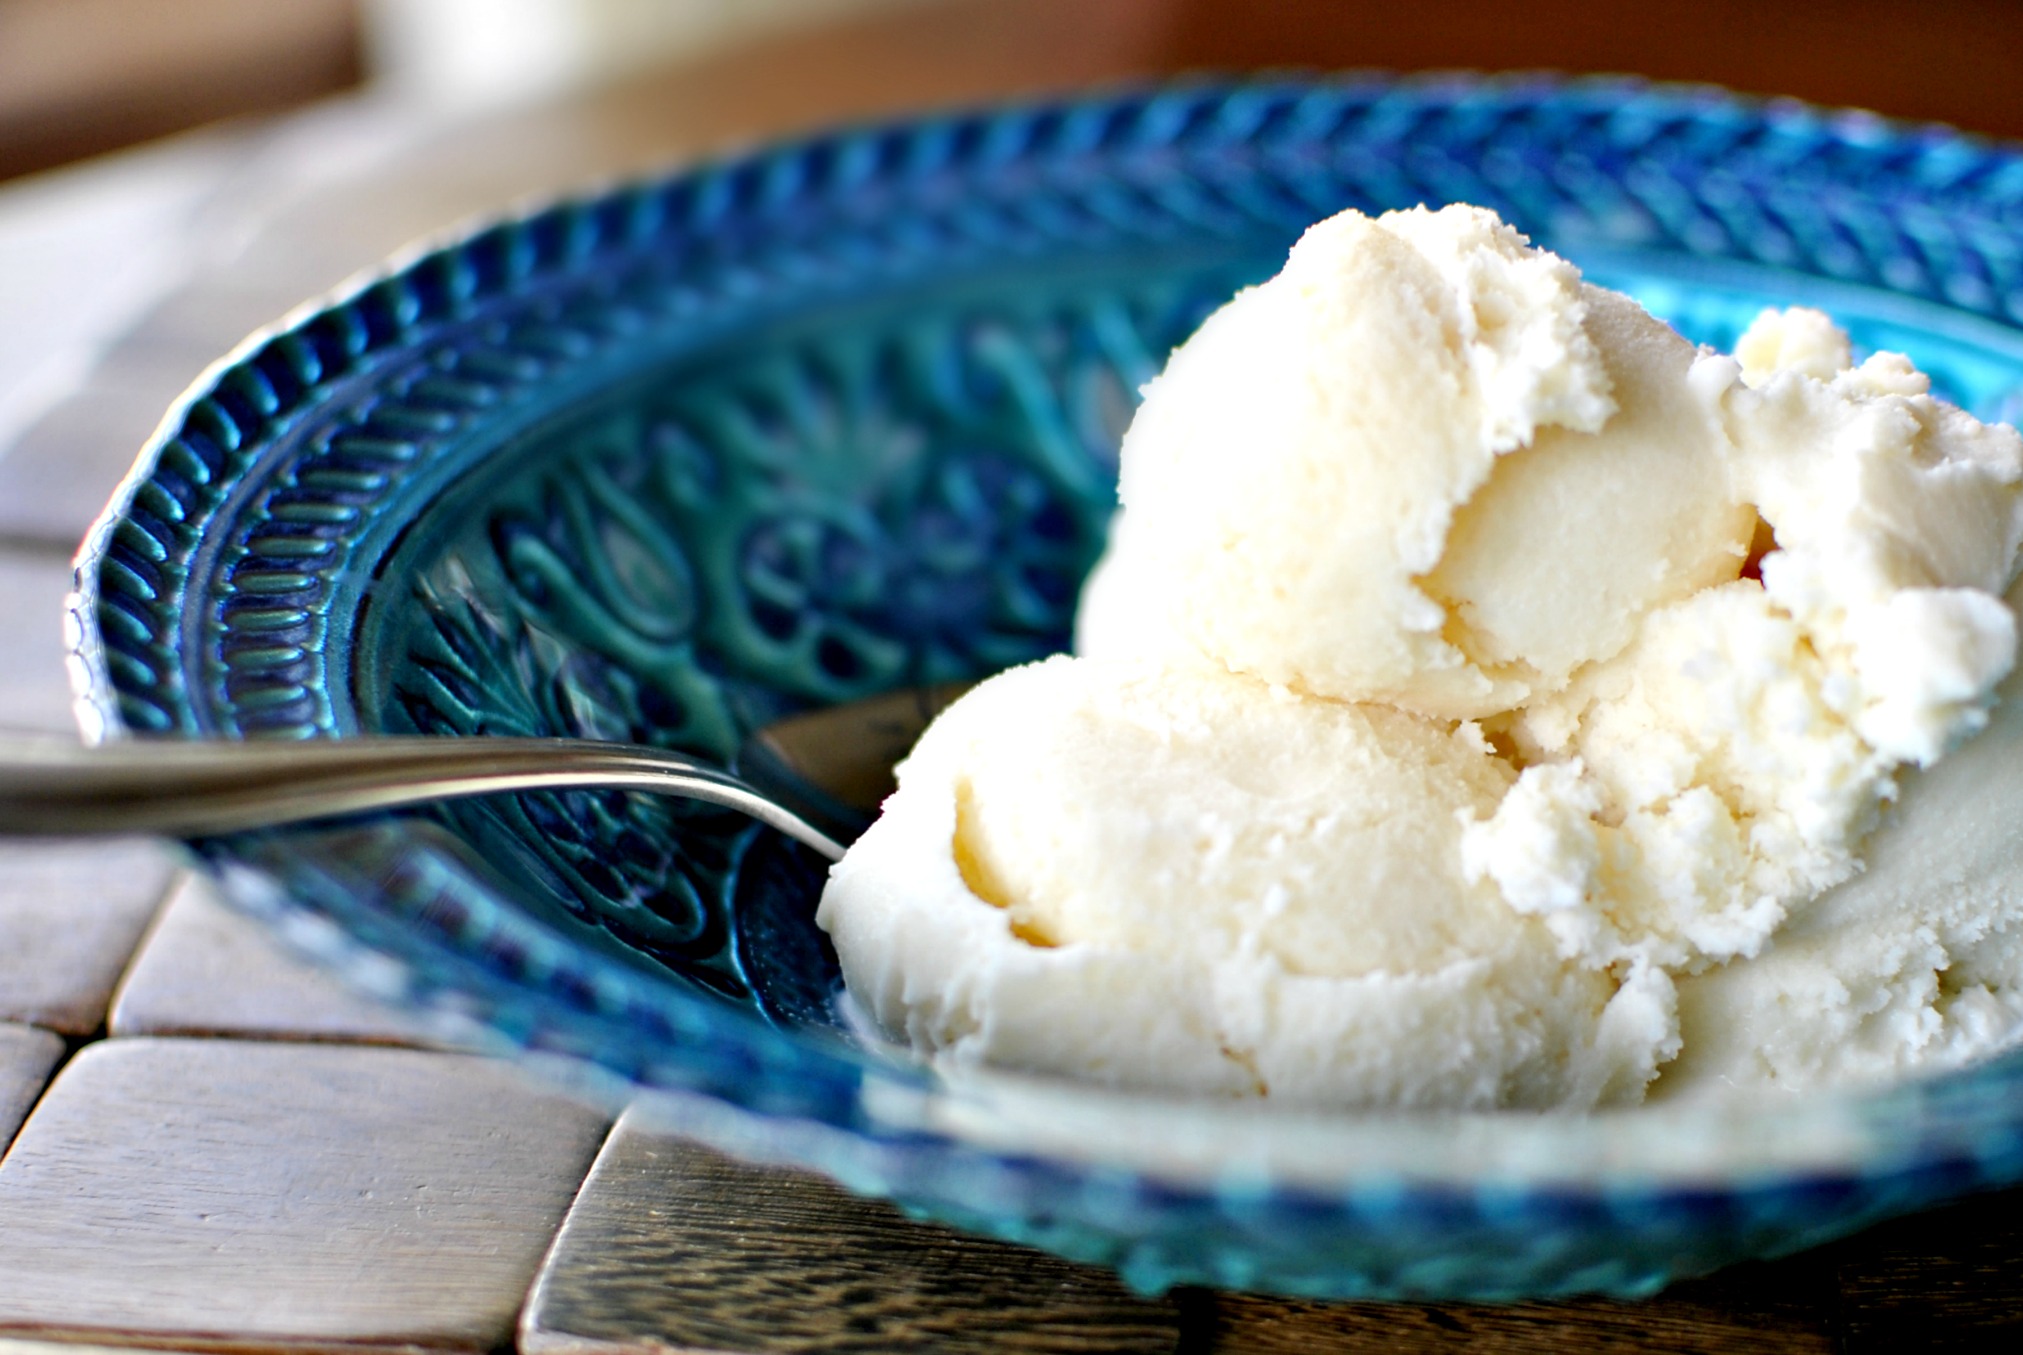 http://www.simplyscratch.com/wp-content/uploads/2013/05/Vanilla-Ice-Cream-Bowl.jpg